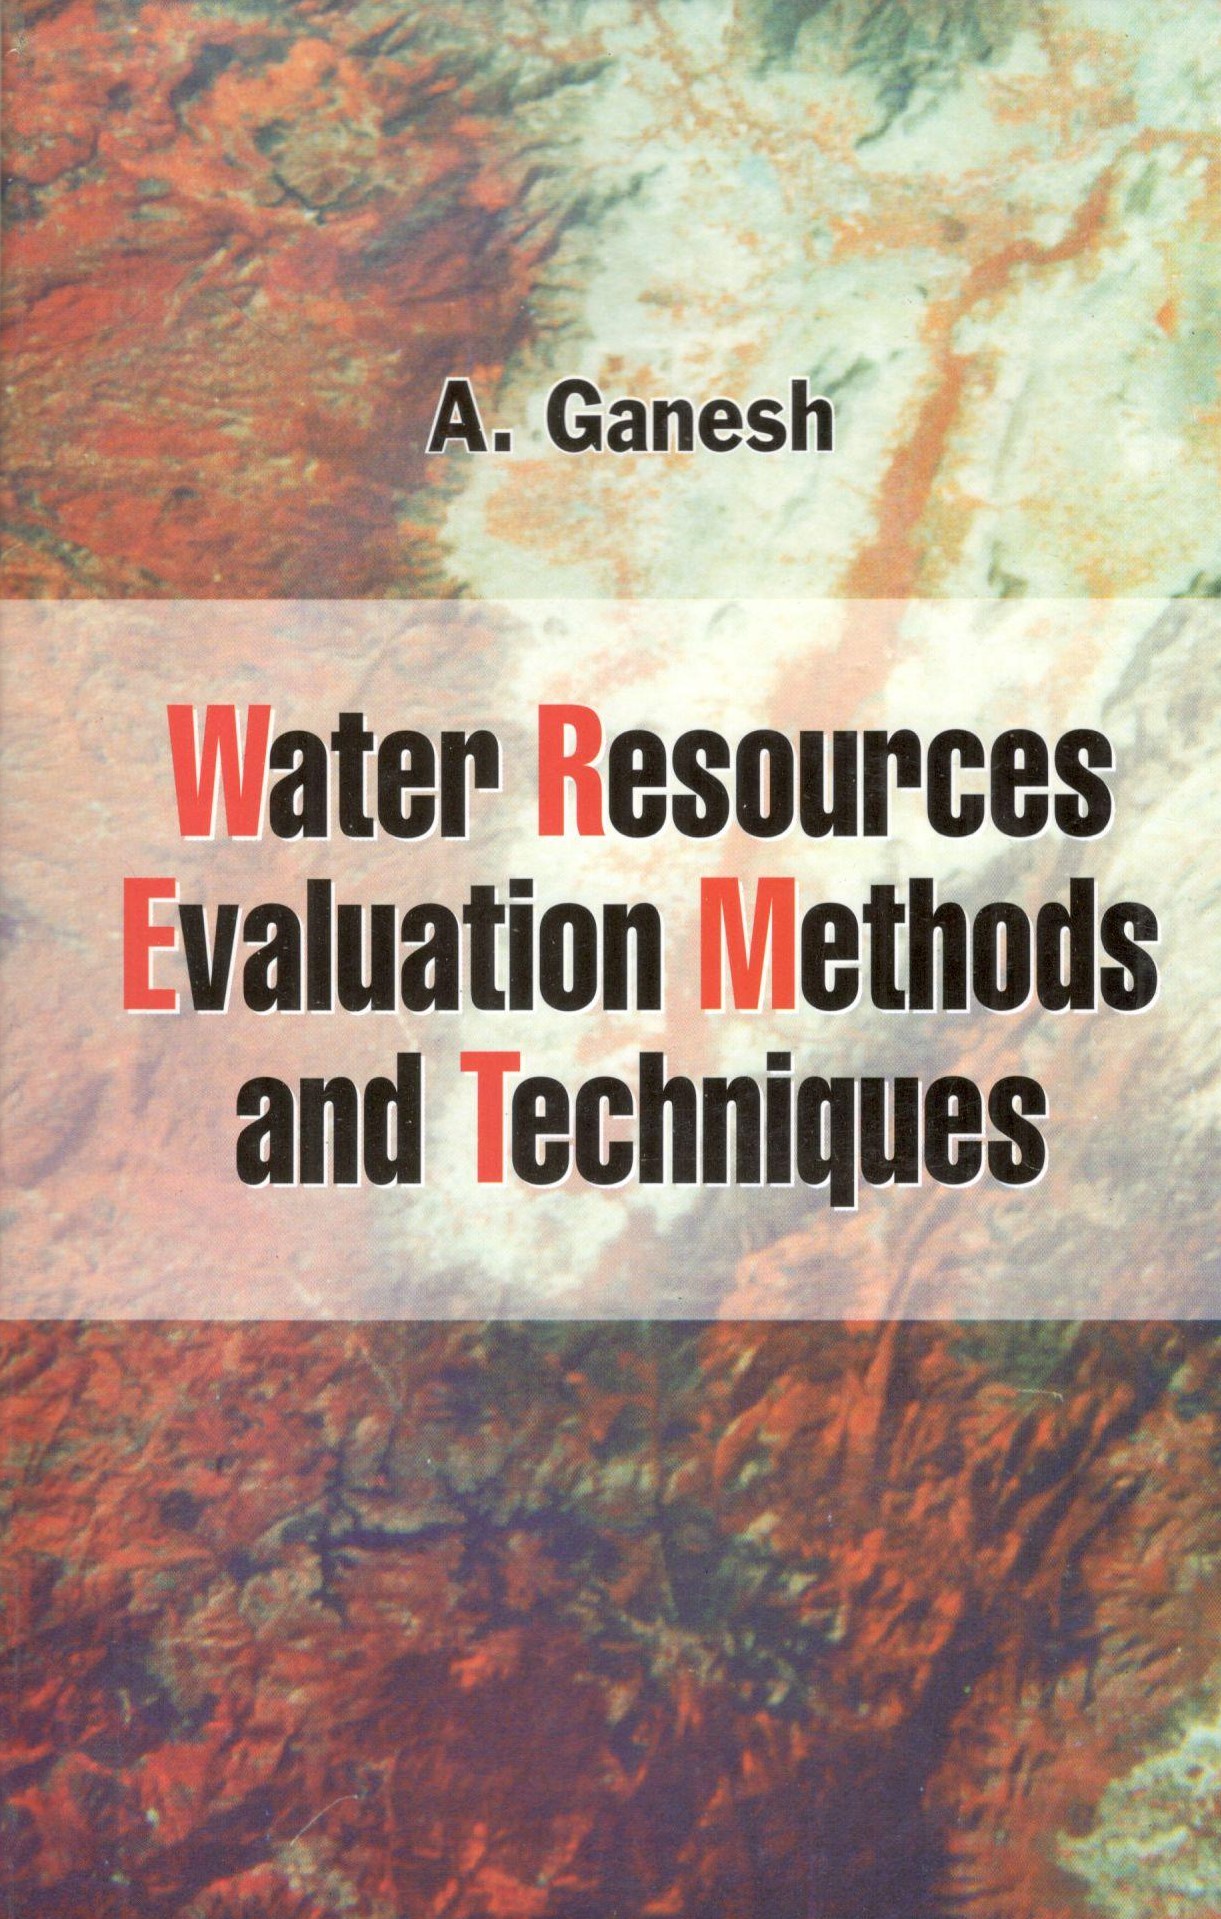 Water Resources Evaluation Methods & Techniques